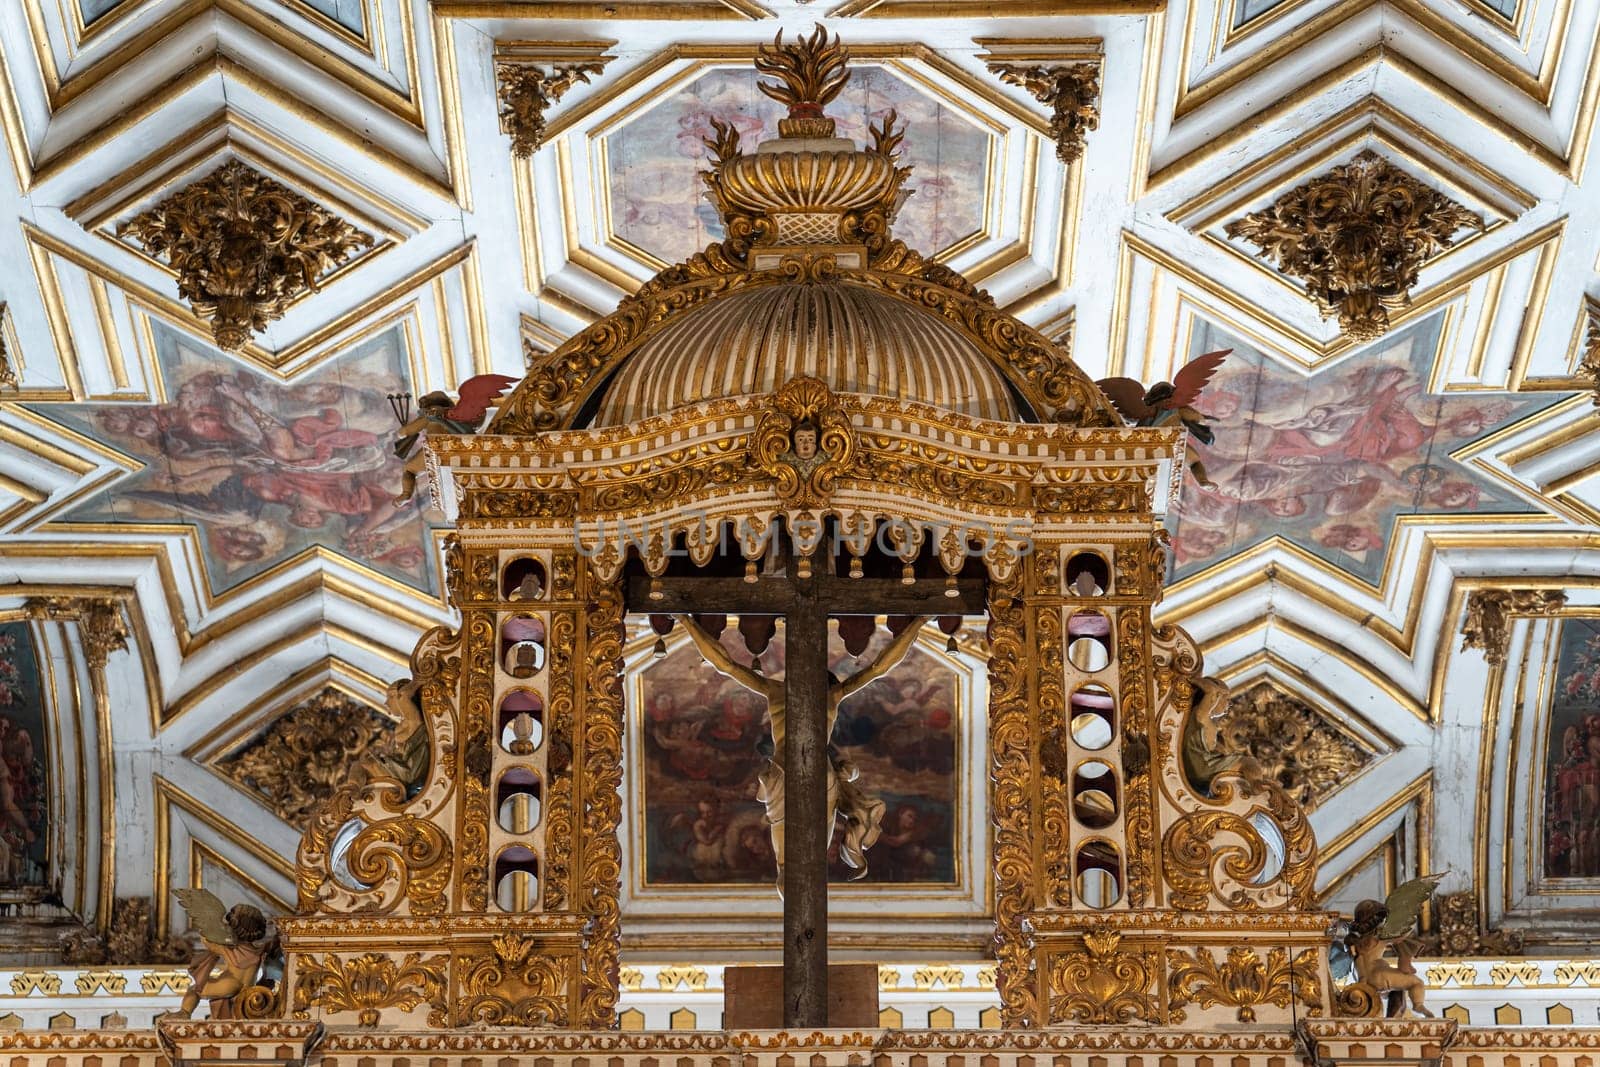 Ornate Golden Altarpiece in Baroque Style Church Interior by FerradalFCG